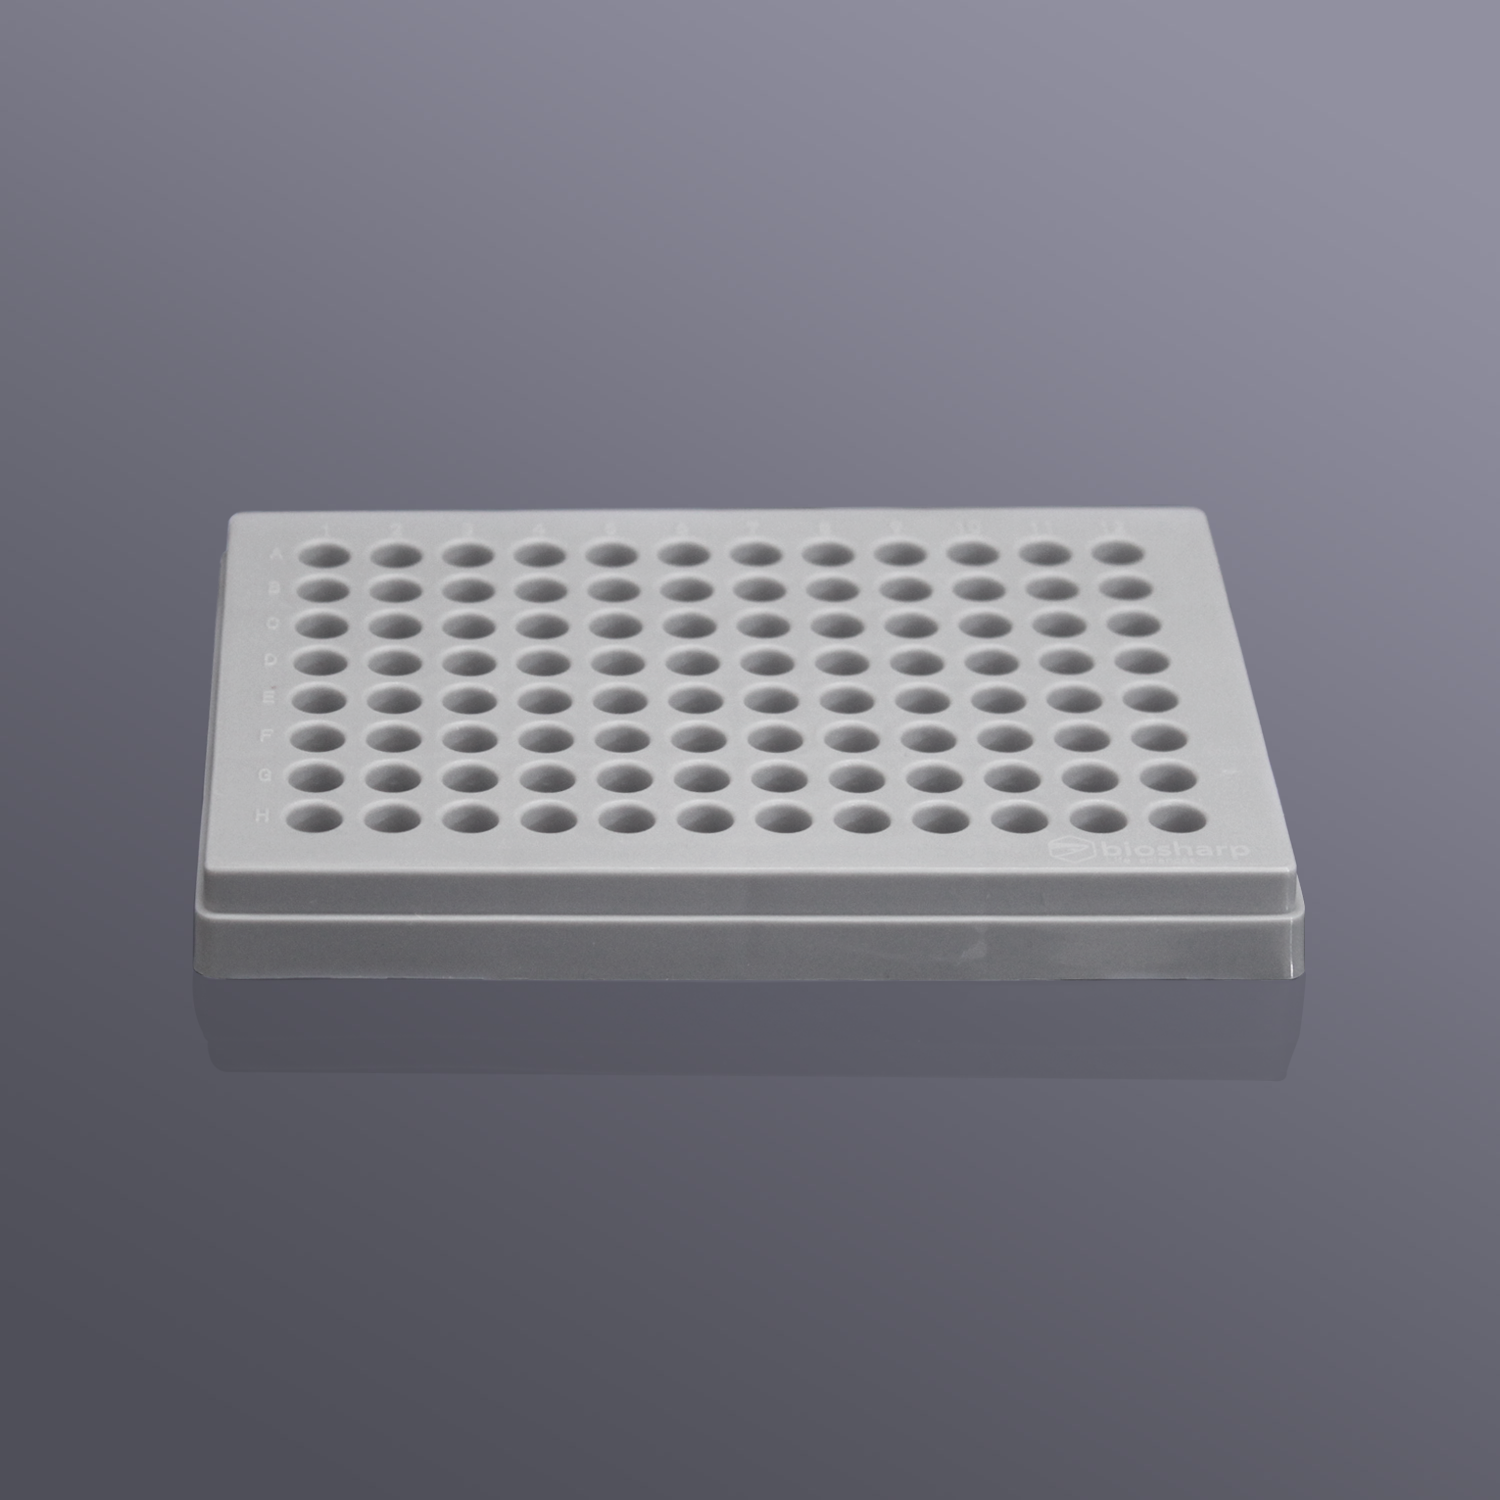 Biosharp BS-02-PB96-PC-G 0.2ml薄壁管盒(PC),灰色